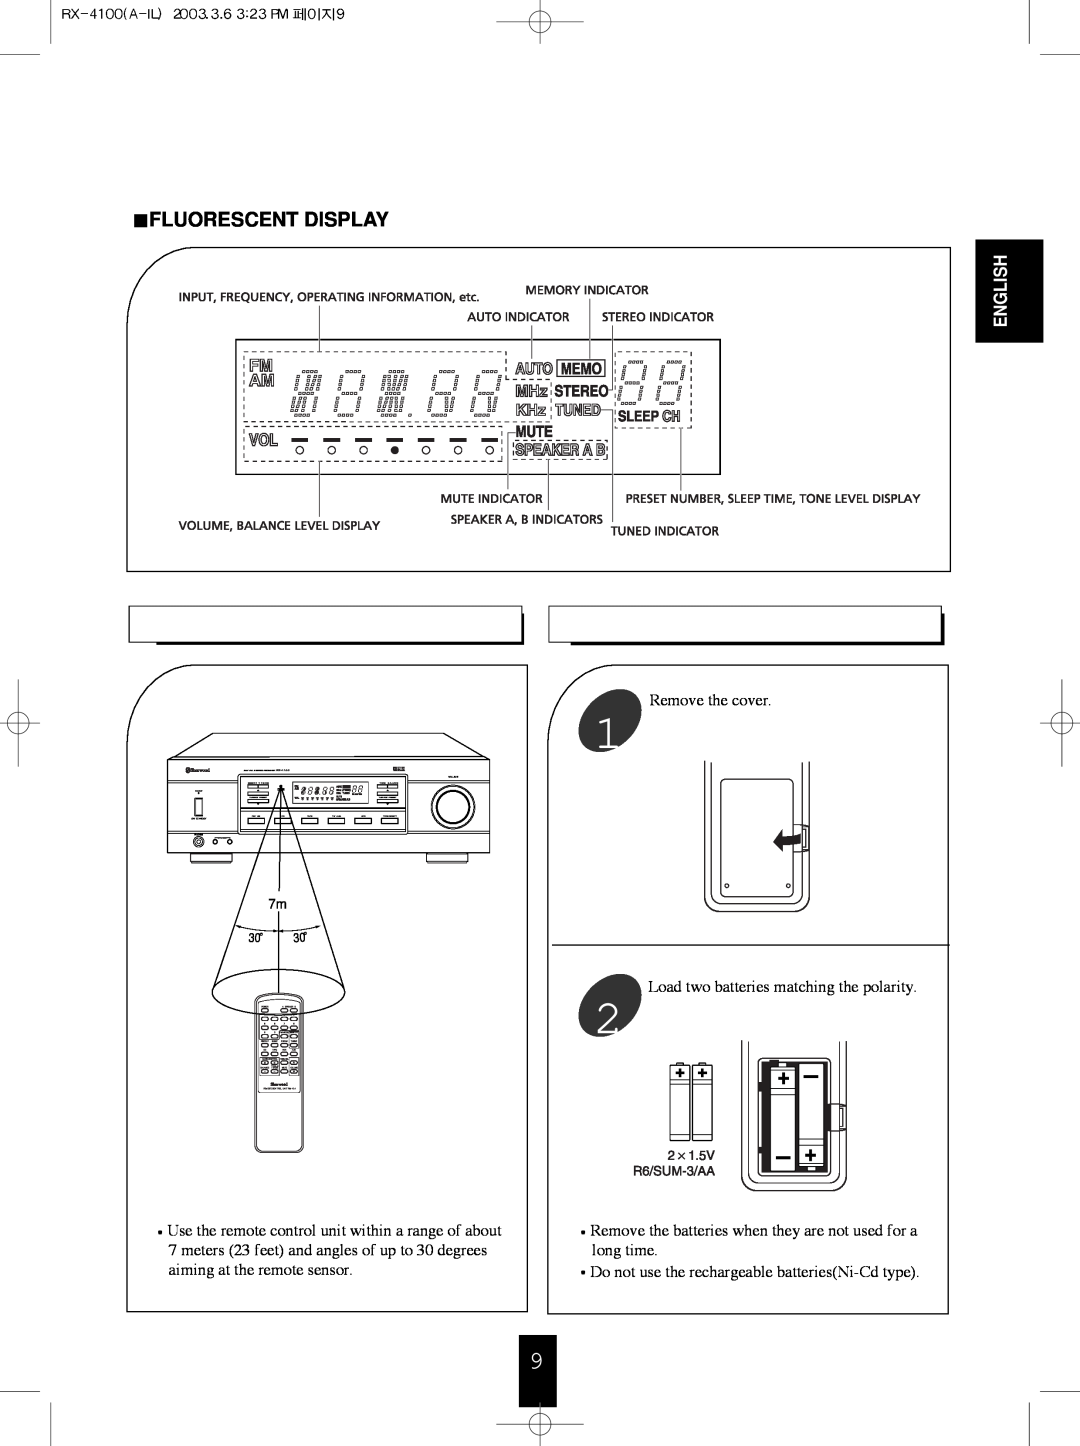 Sherwood RX-4100 manual Fluorescent Display, English 